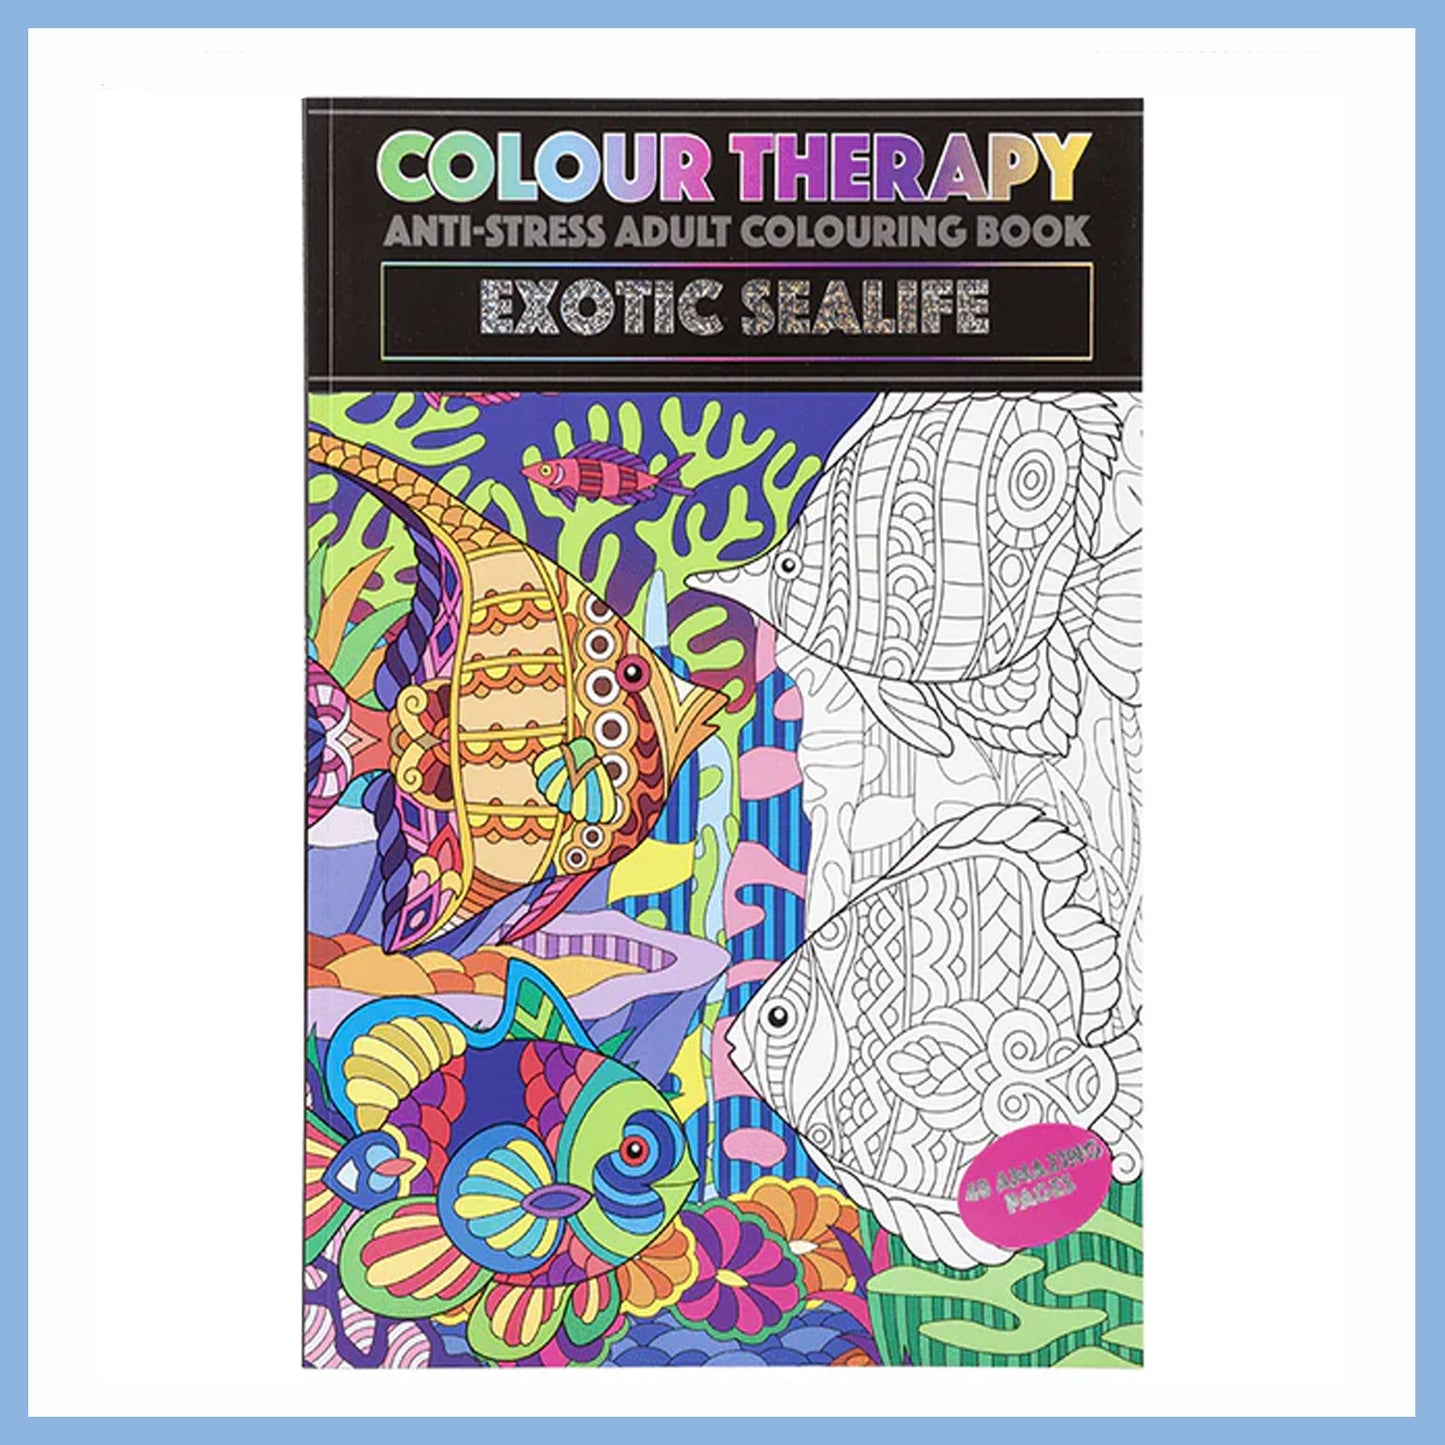 Colour Therapy Anti Stress Colouring Book - Exotic Sealife